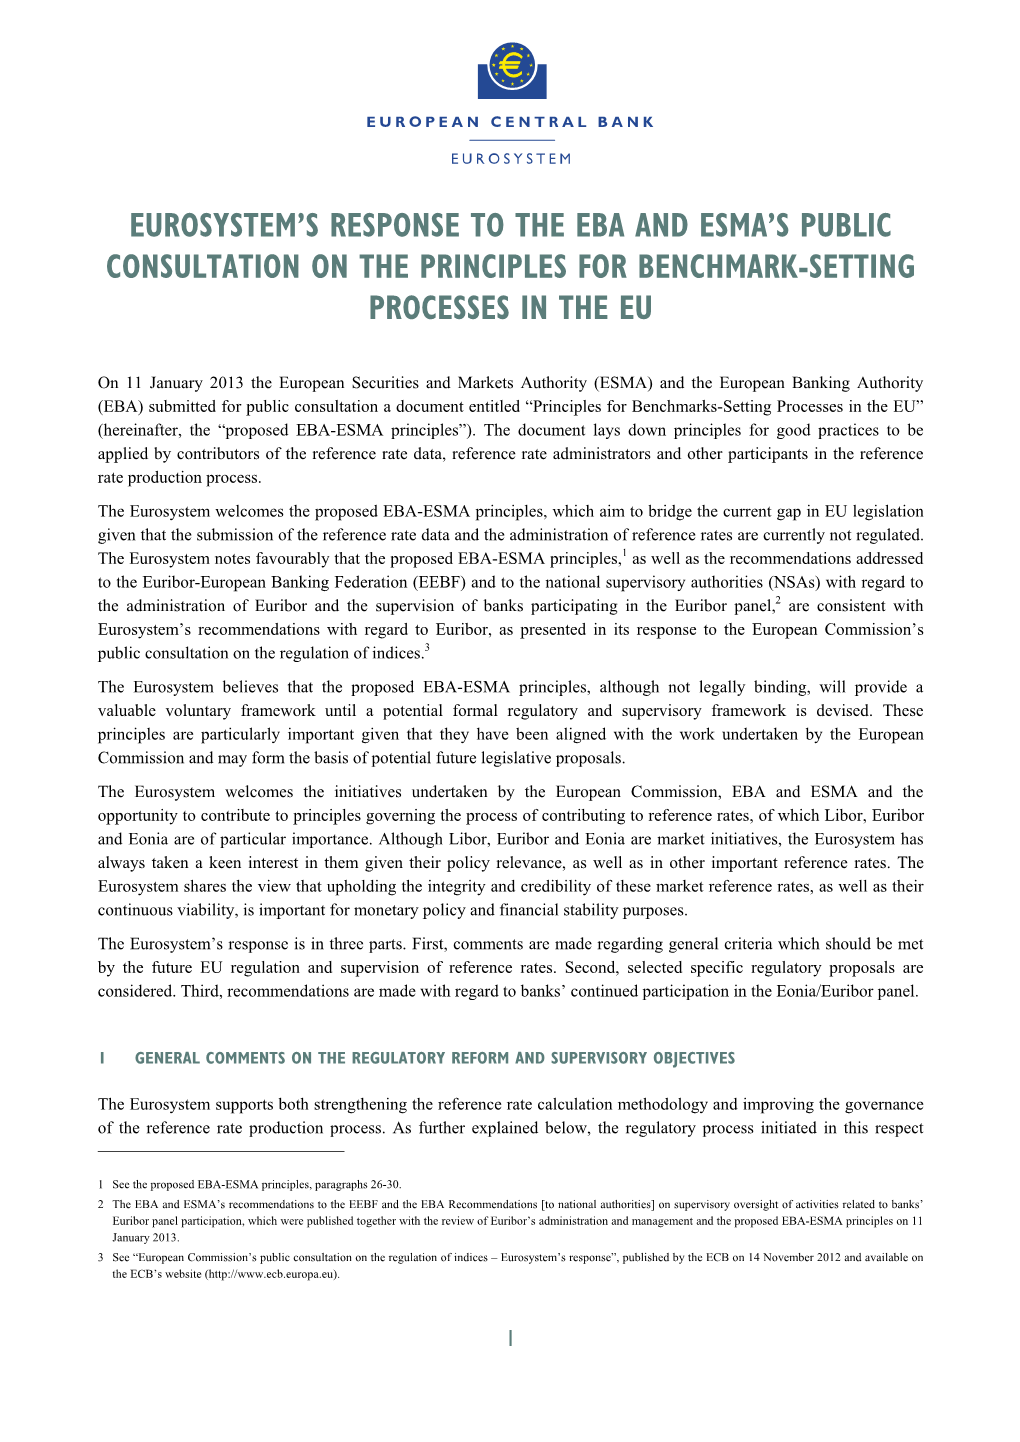 Eurosystem's Response to the EBA and ESMA's Public Consultation On